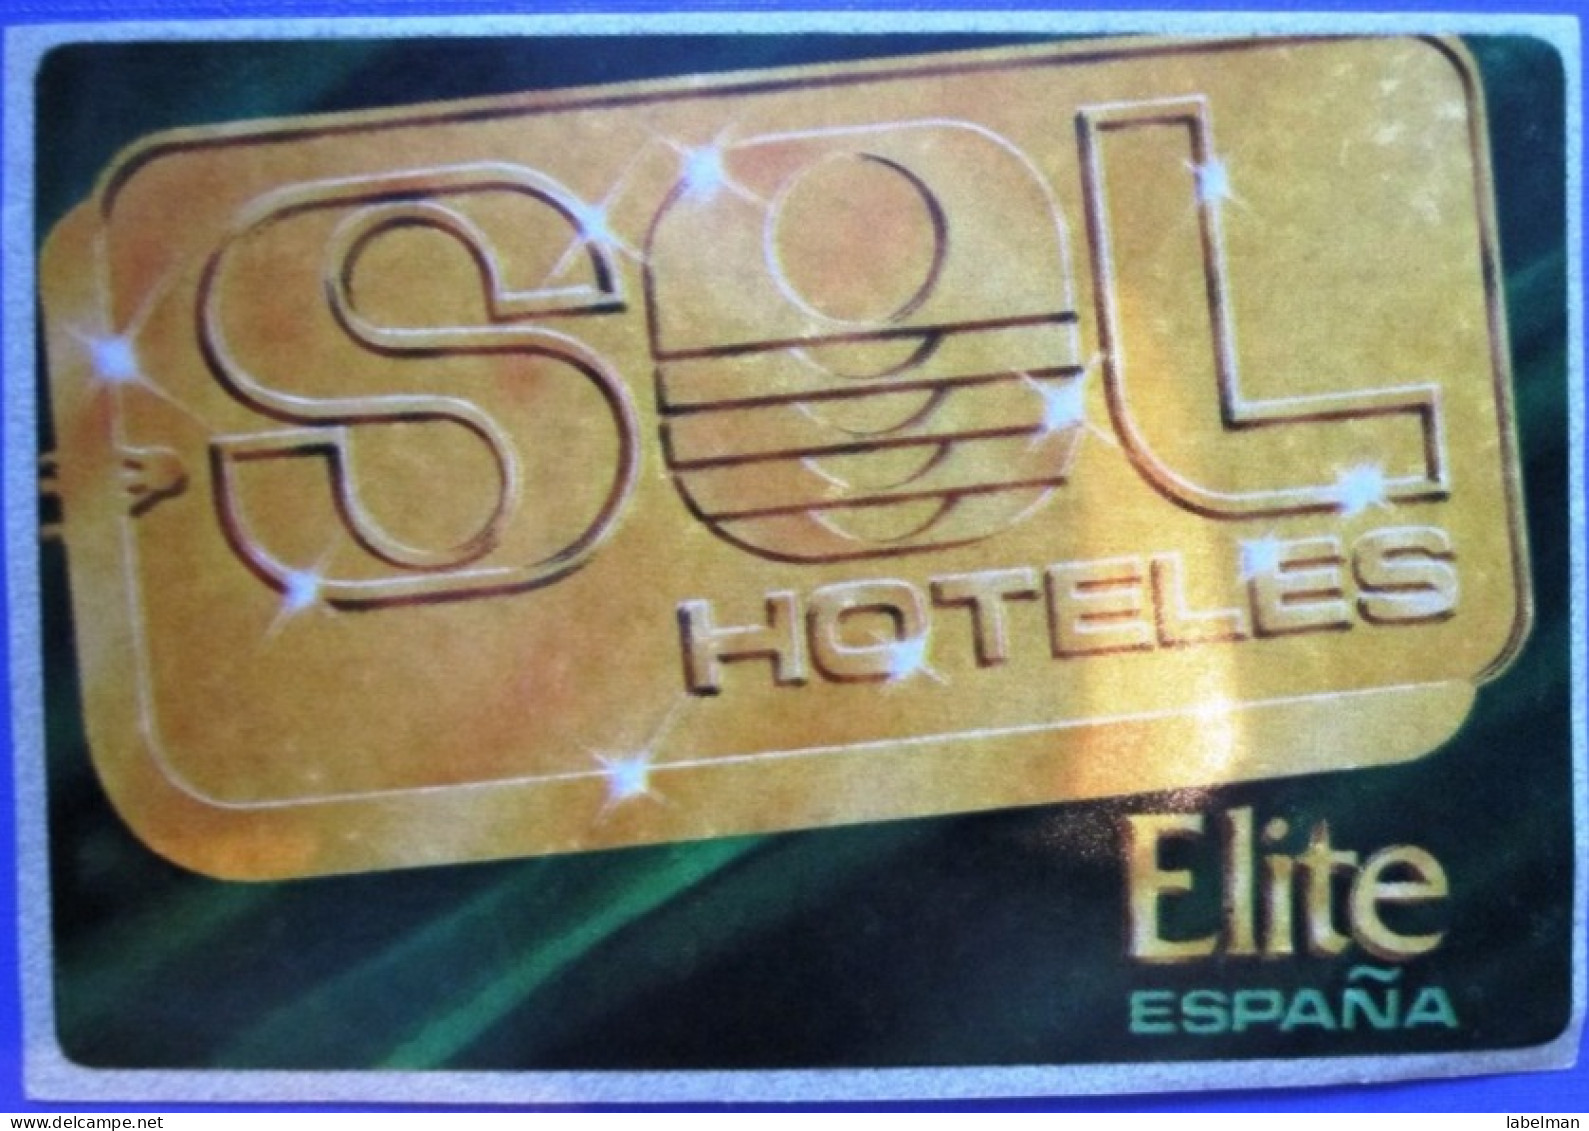 HOTEL RESIDENCIA PENSION HOSTAL MOTEL SOL HOTELES SPAIN LUGGAGE LABEL ETIQUETTE AUFKLEBER DECAL STICKER MADRID - Hotel Labels